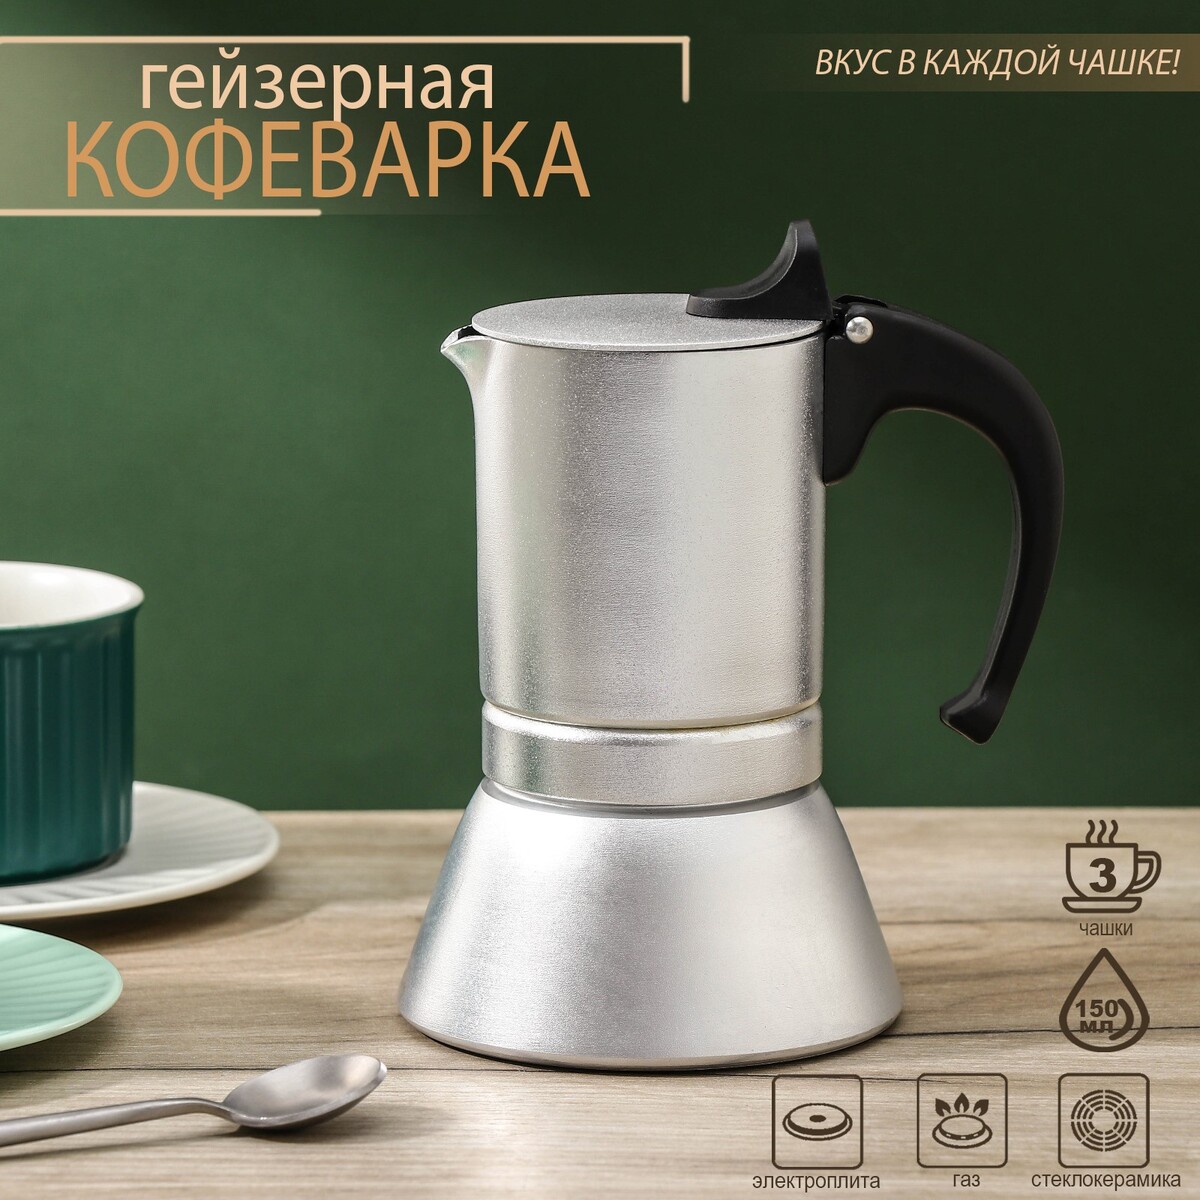 Кофеварка гейзерная magistro salem, на 3 чашки, 150 мл, индукция кофеварка гейзерная magistro